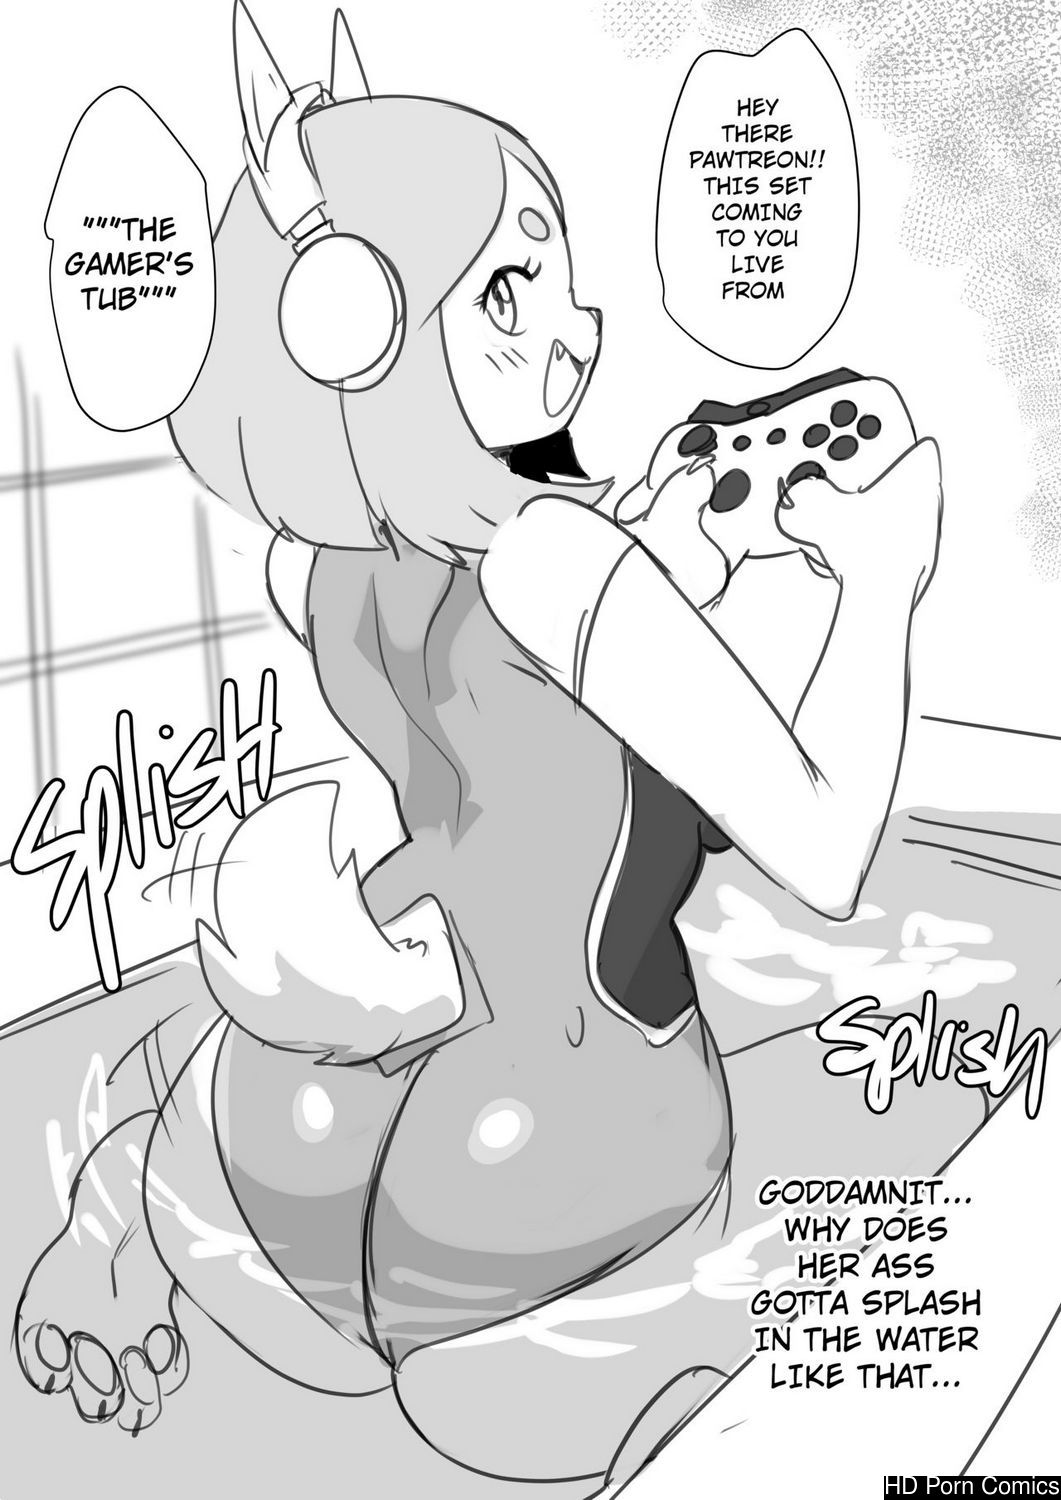 Furry gamer girl porn comic